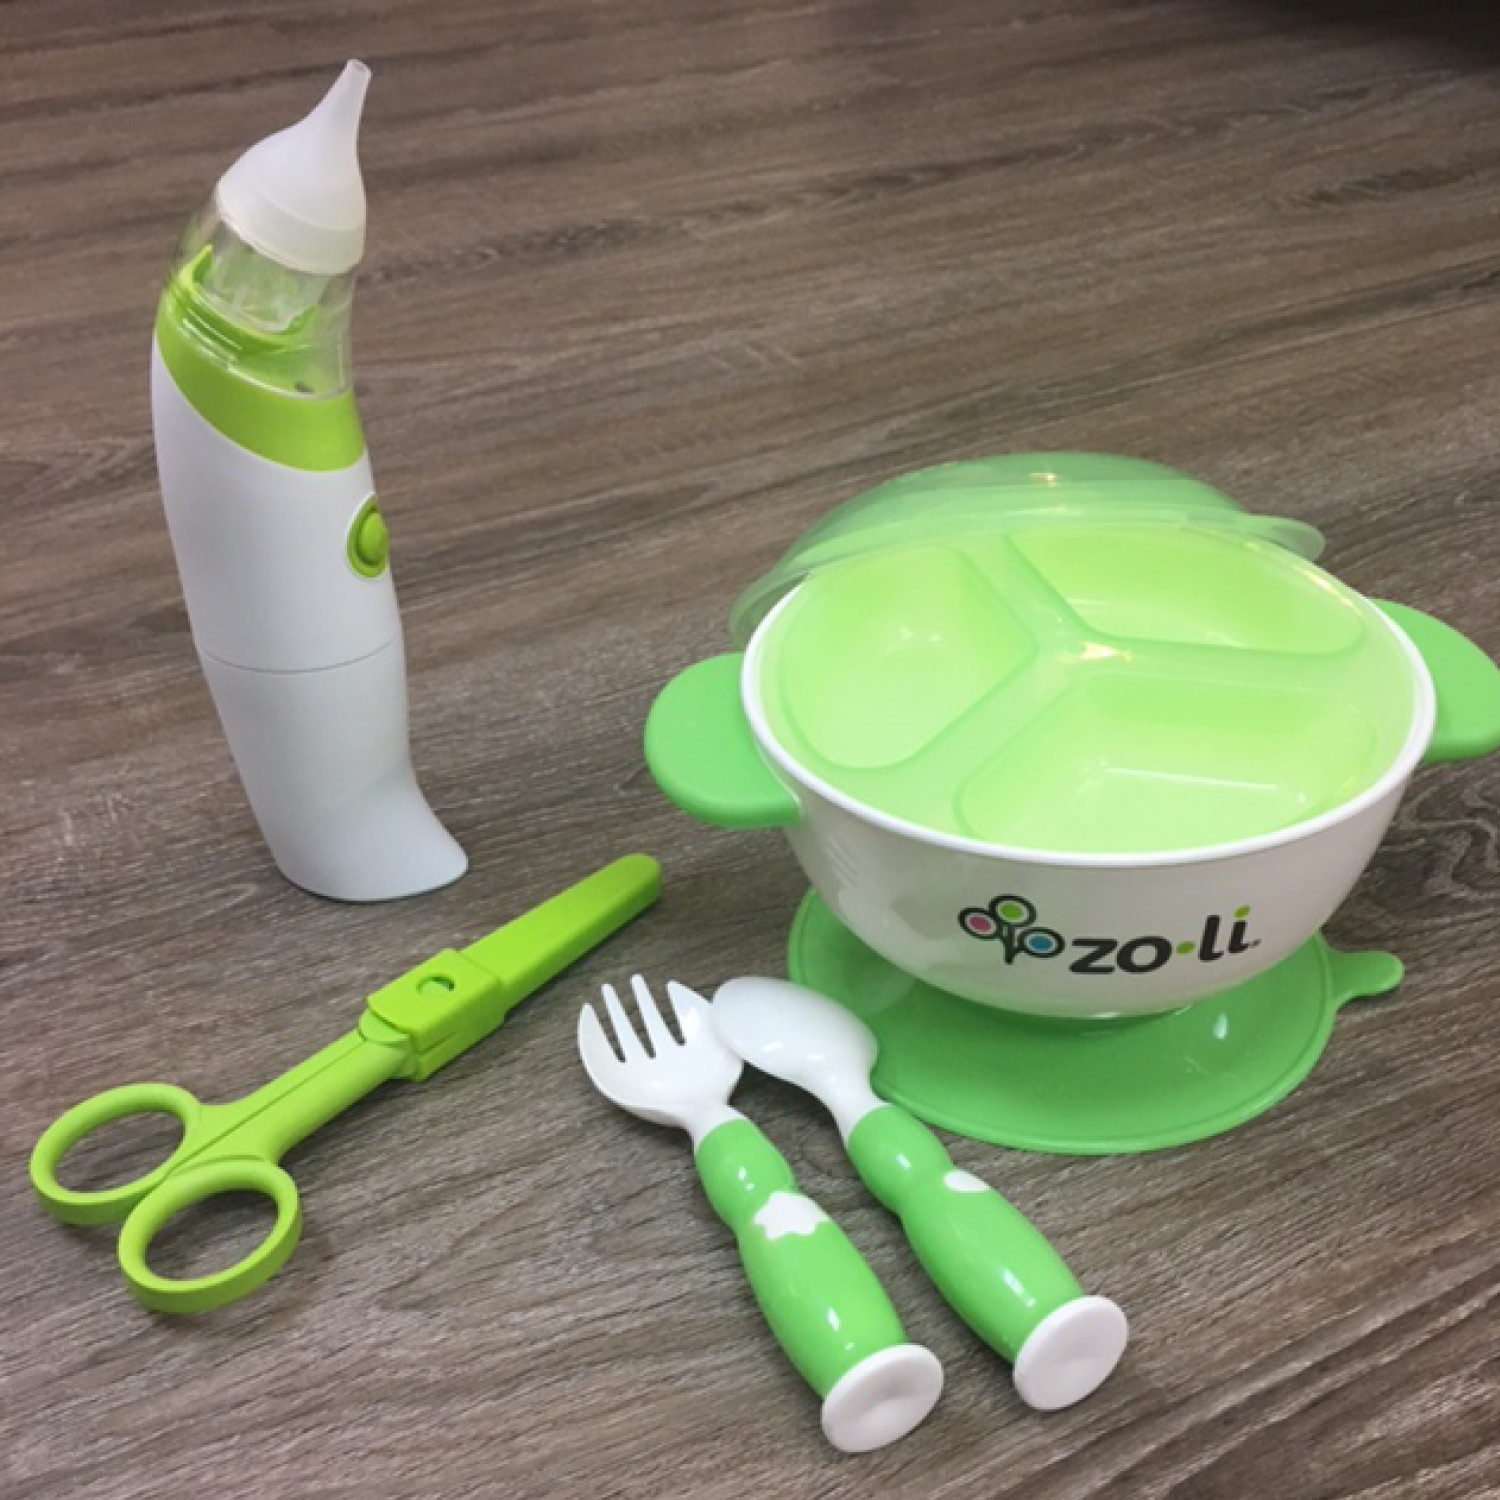 Zoli Green products